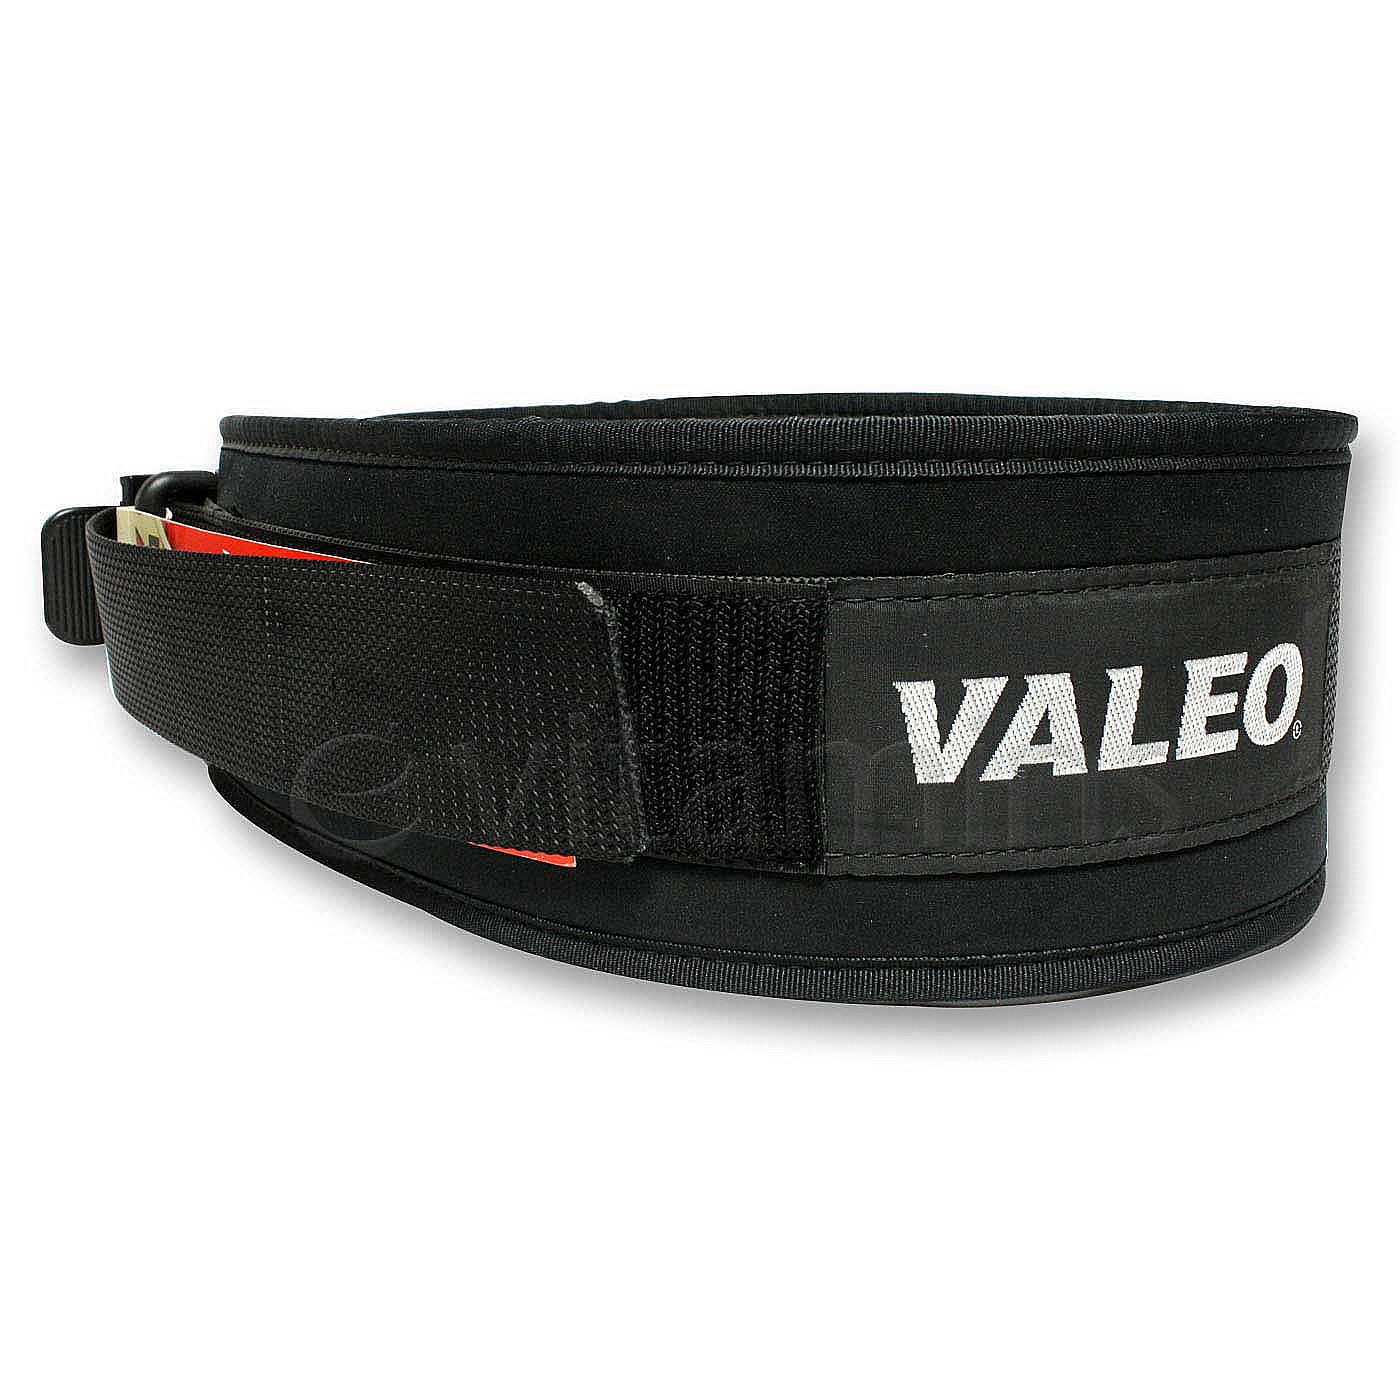 Valeo Medium Black 4 VLP Performance Low Profile Back Support Belt by Valeo